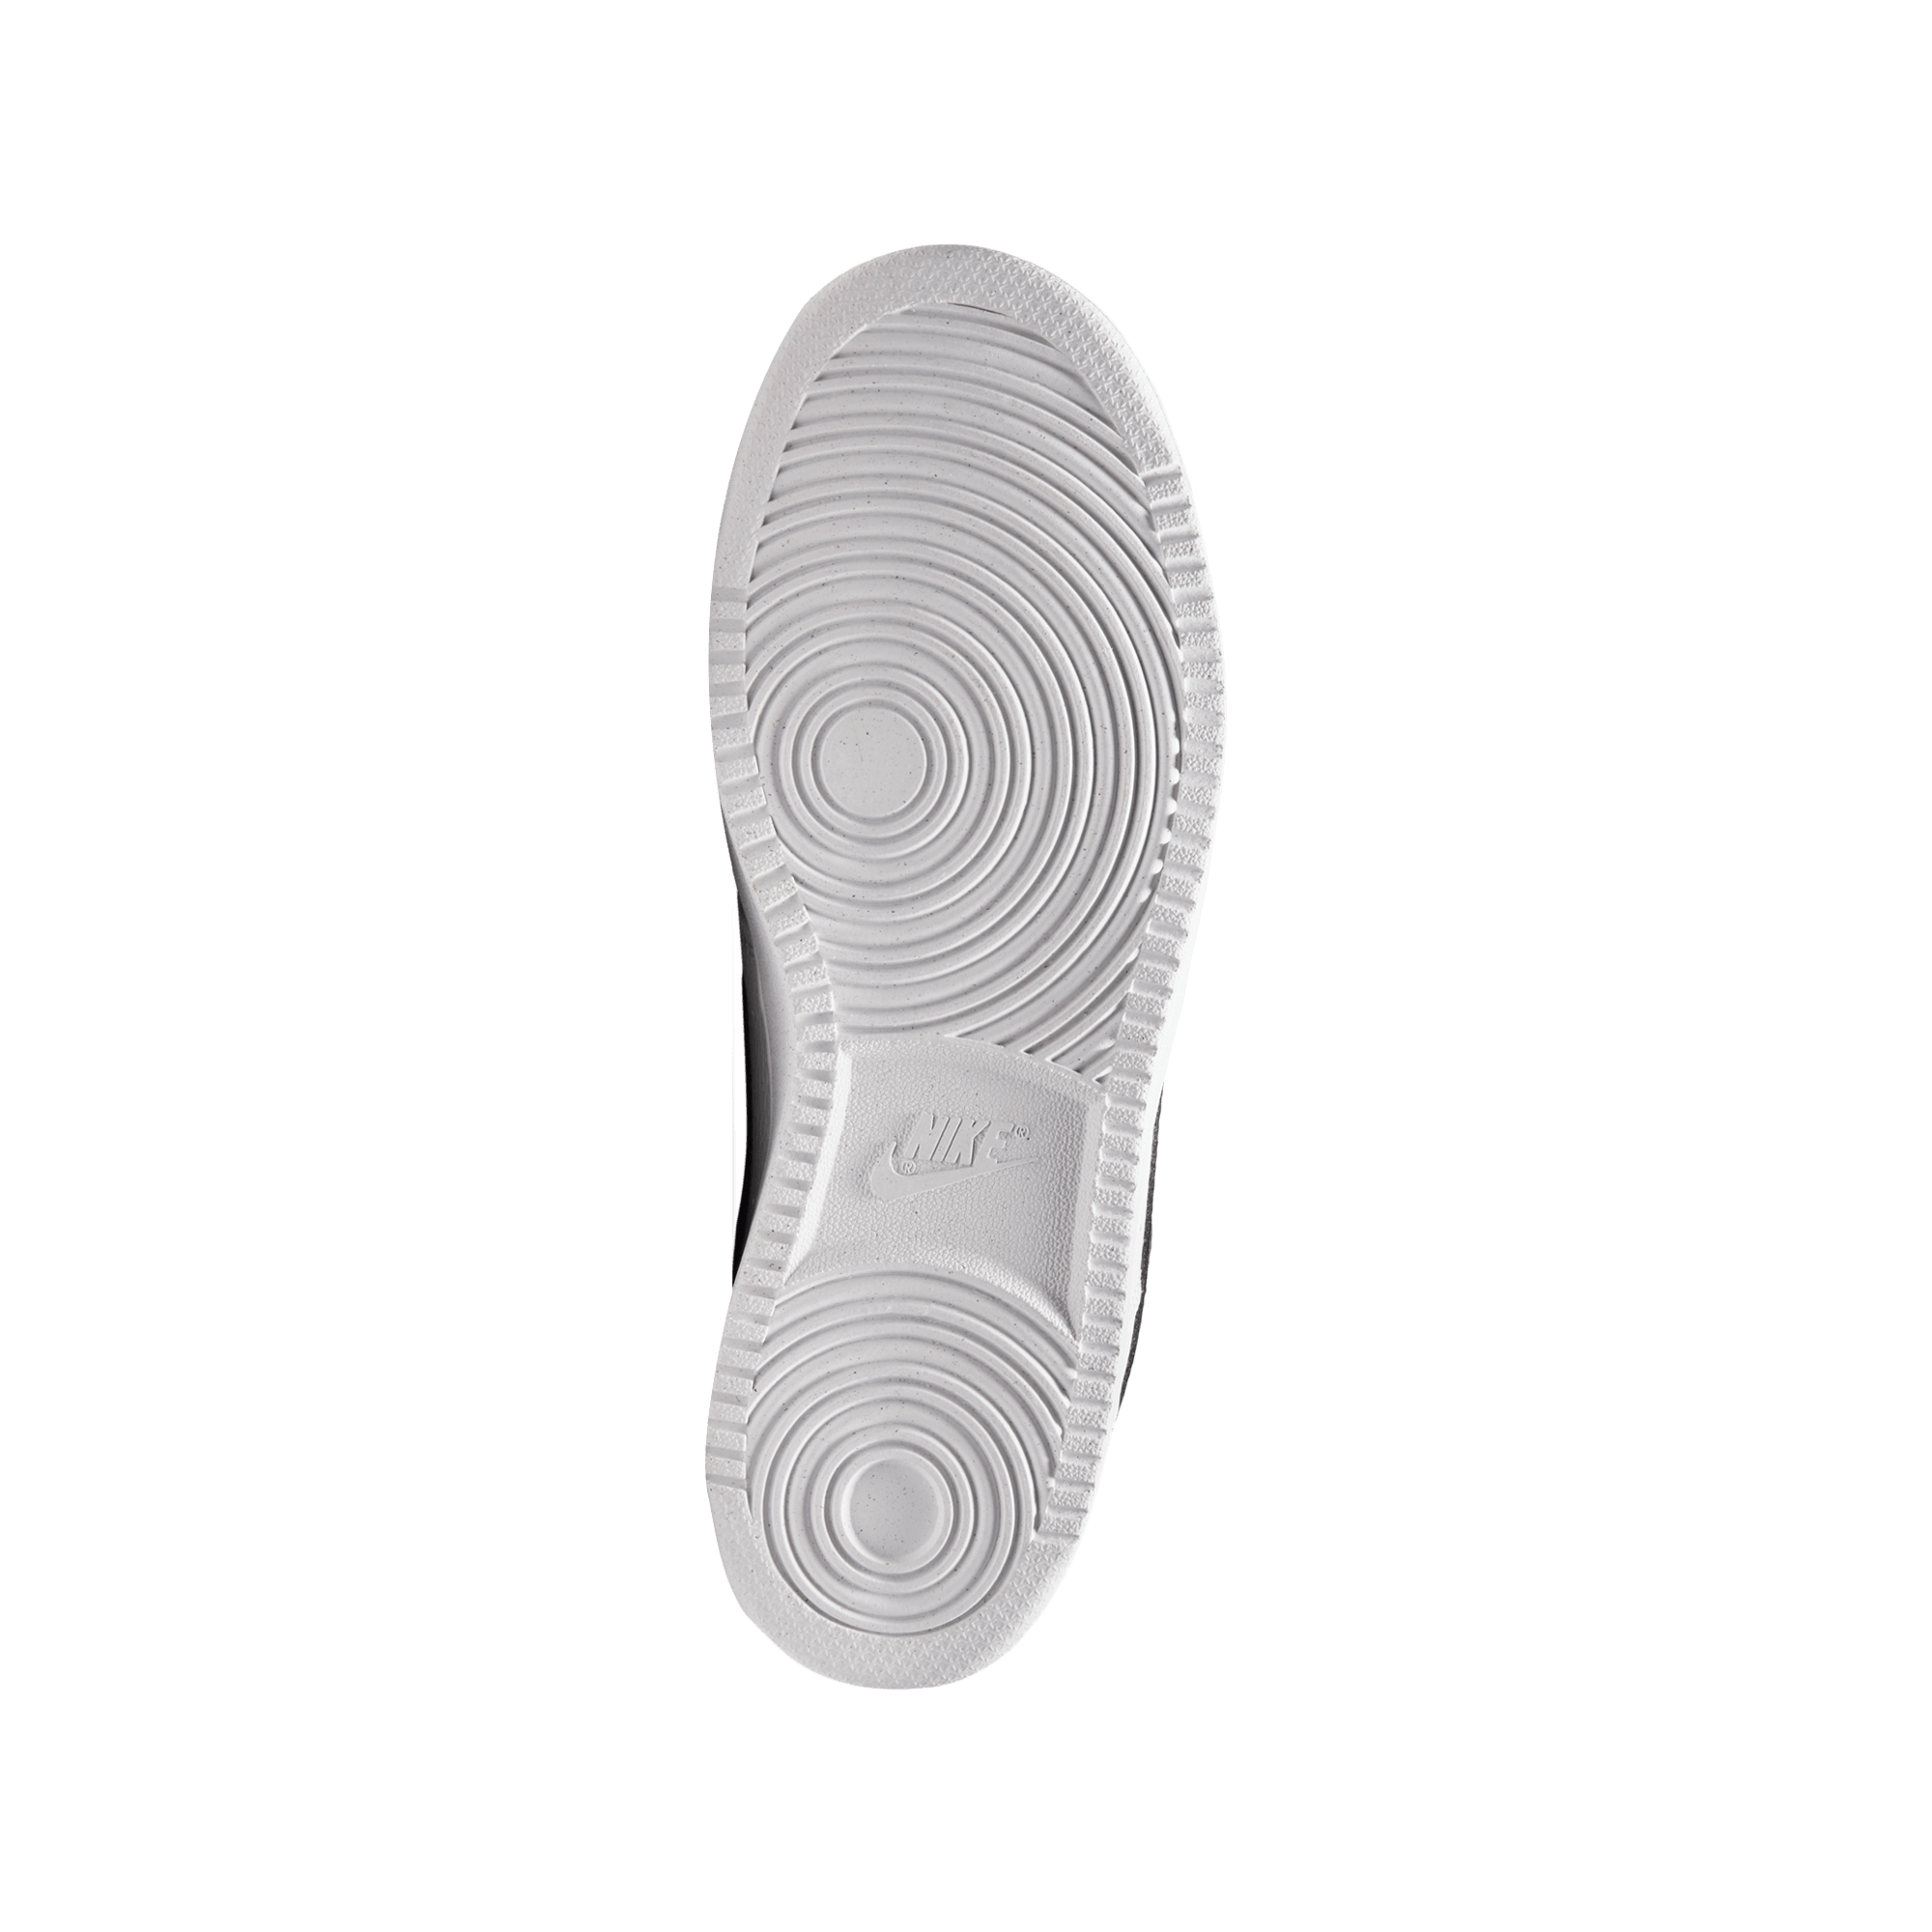 Zapatillas para niño NIKE dh3158-101 blanco